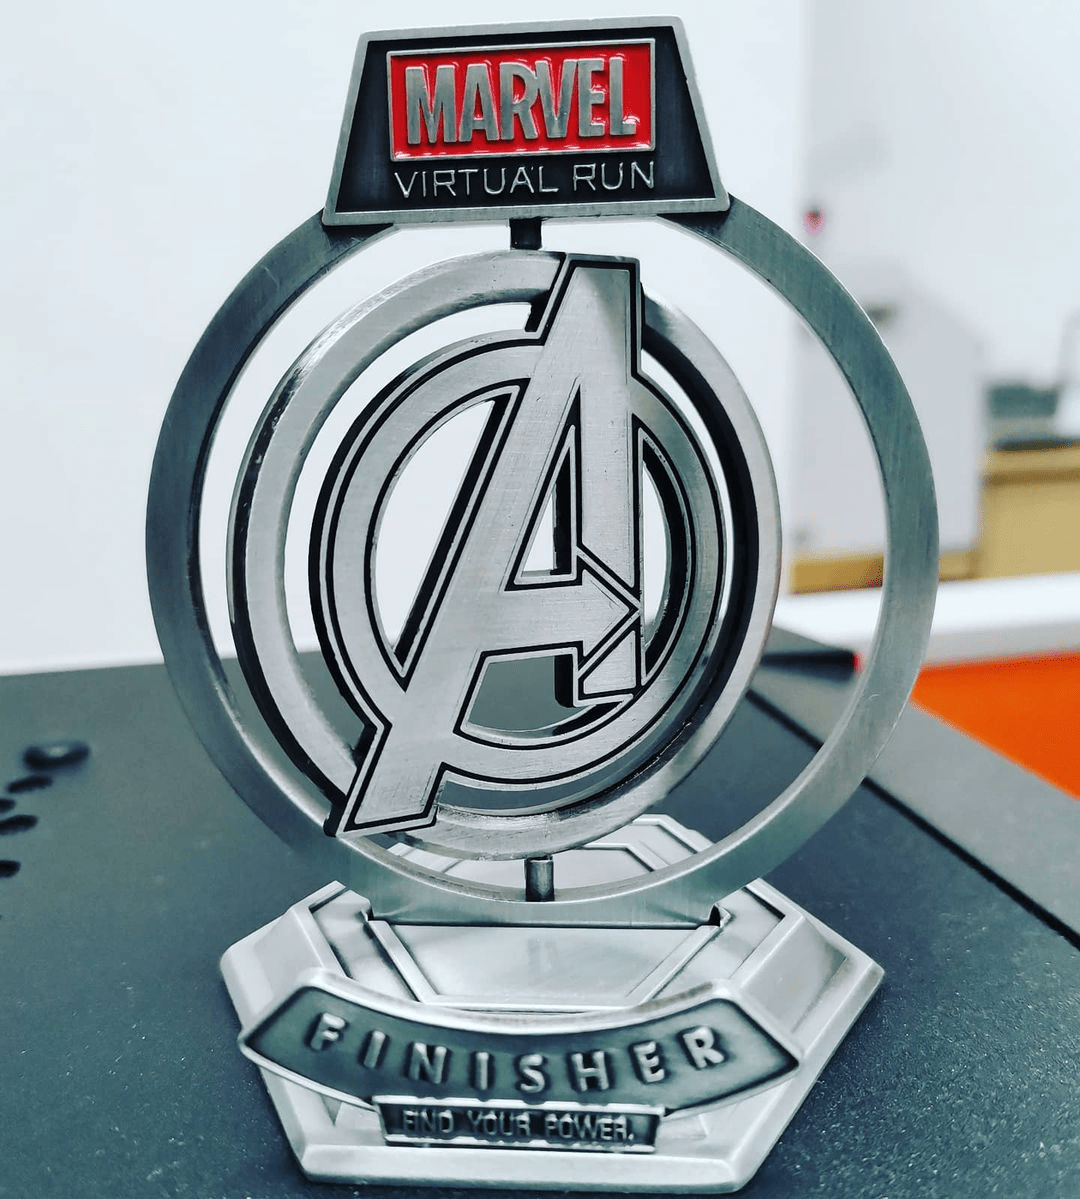 Marvel Virtual Run trophy